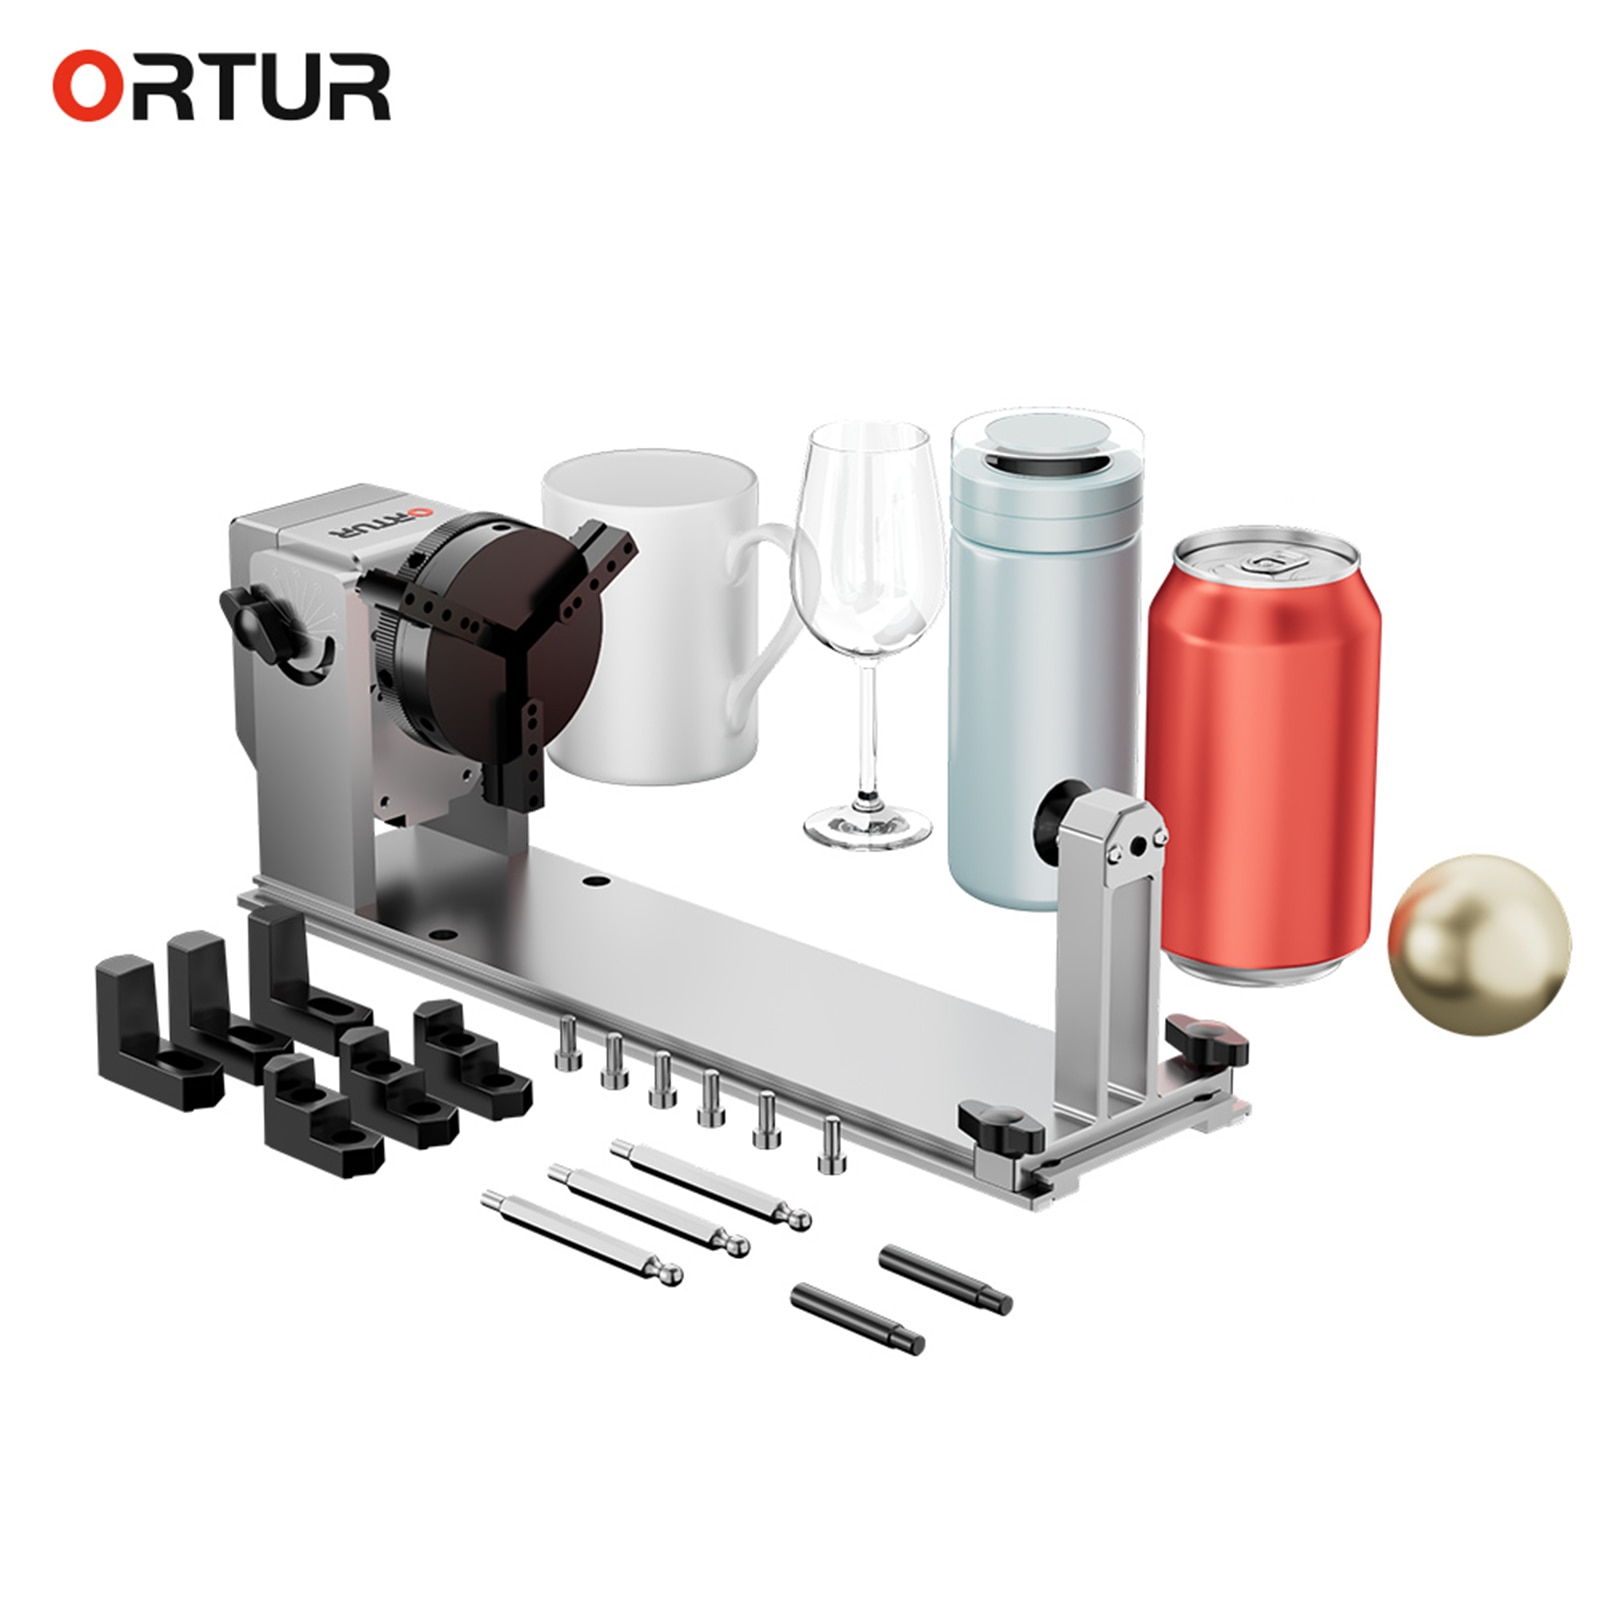 ORTUR 99% 레이저 조각기 기계용 회전 롤러, 척 360 ° 회전 180 ° 수평 플립 앵글 베이스, YRC1.0, 신제품